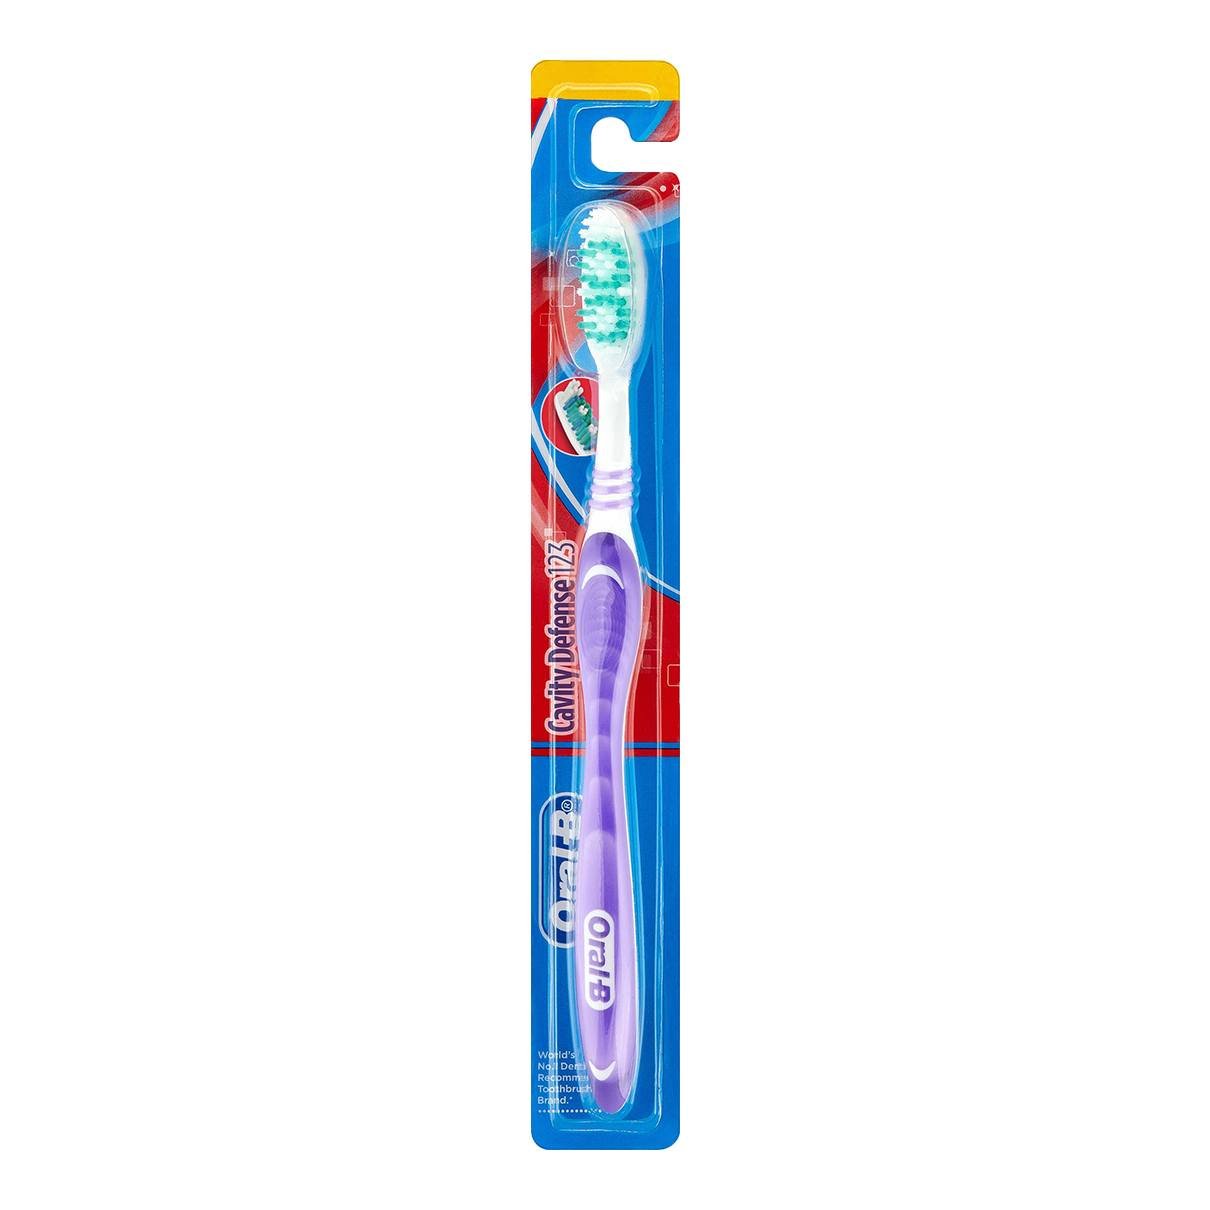 Oral-B Cavity Defense Toothbrush